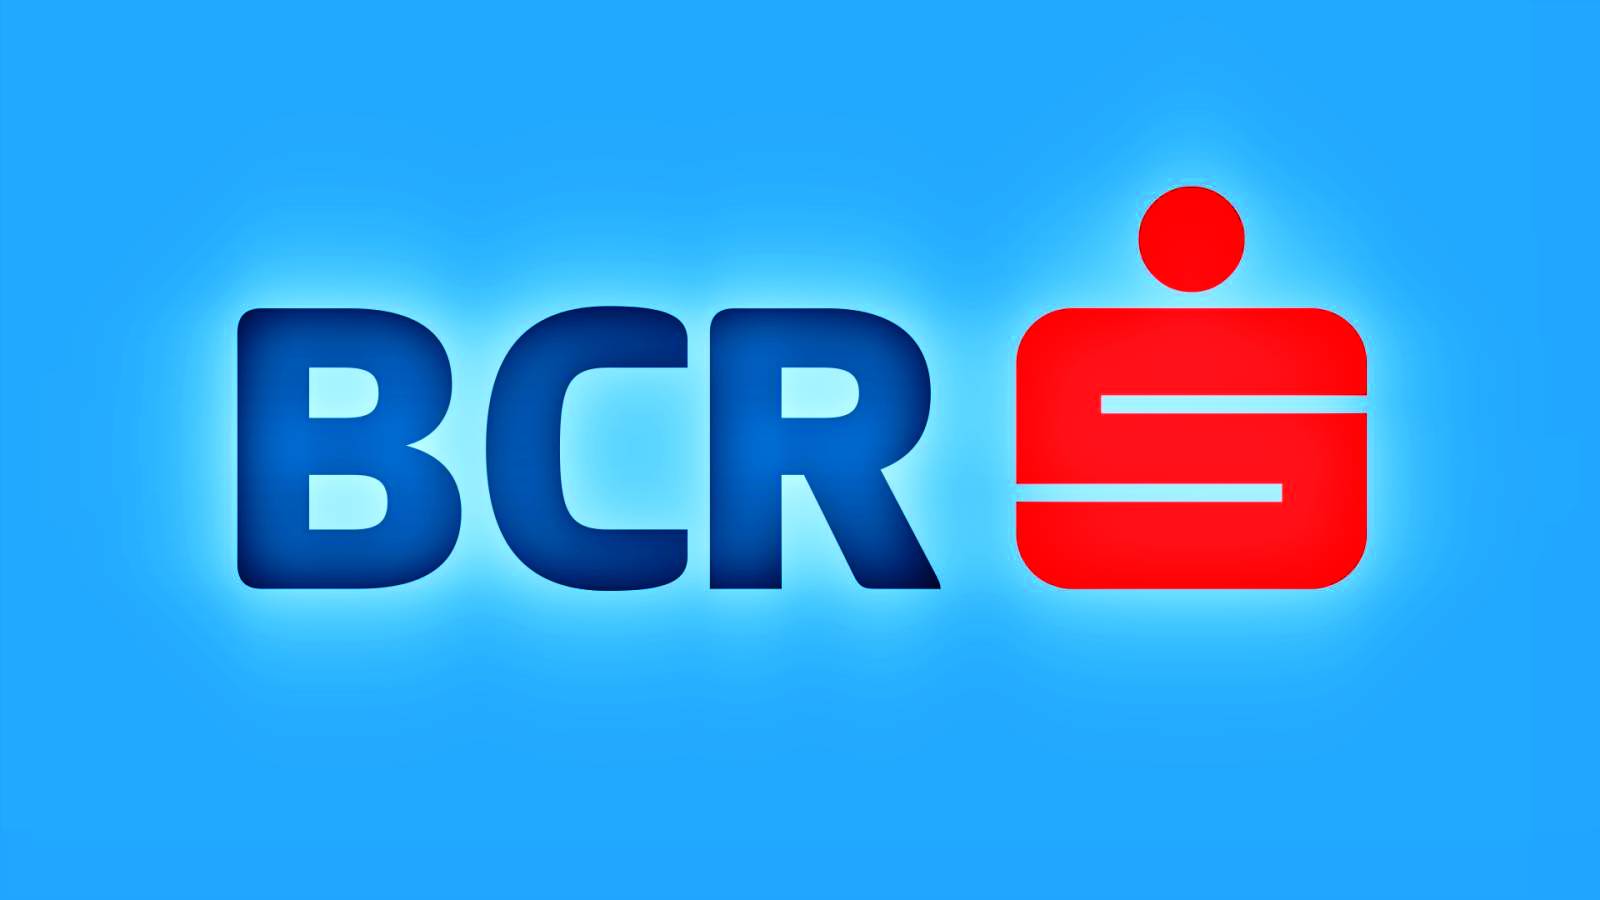 BCR Romania tastatura